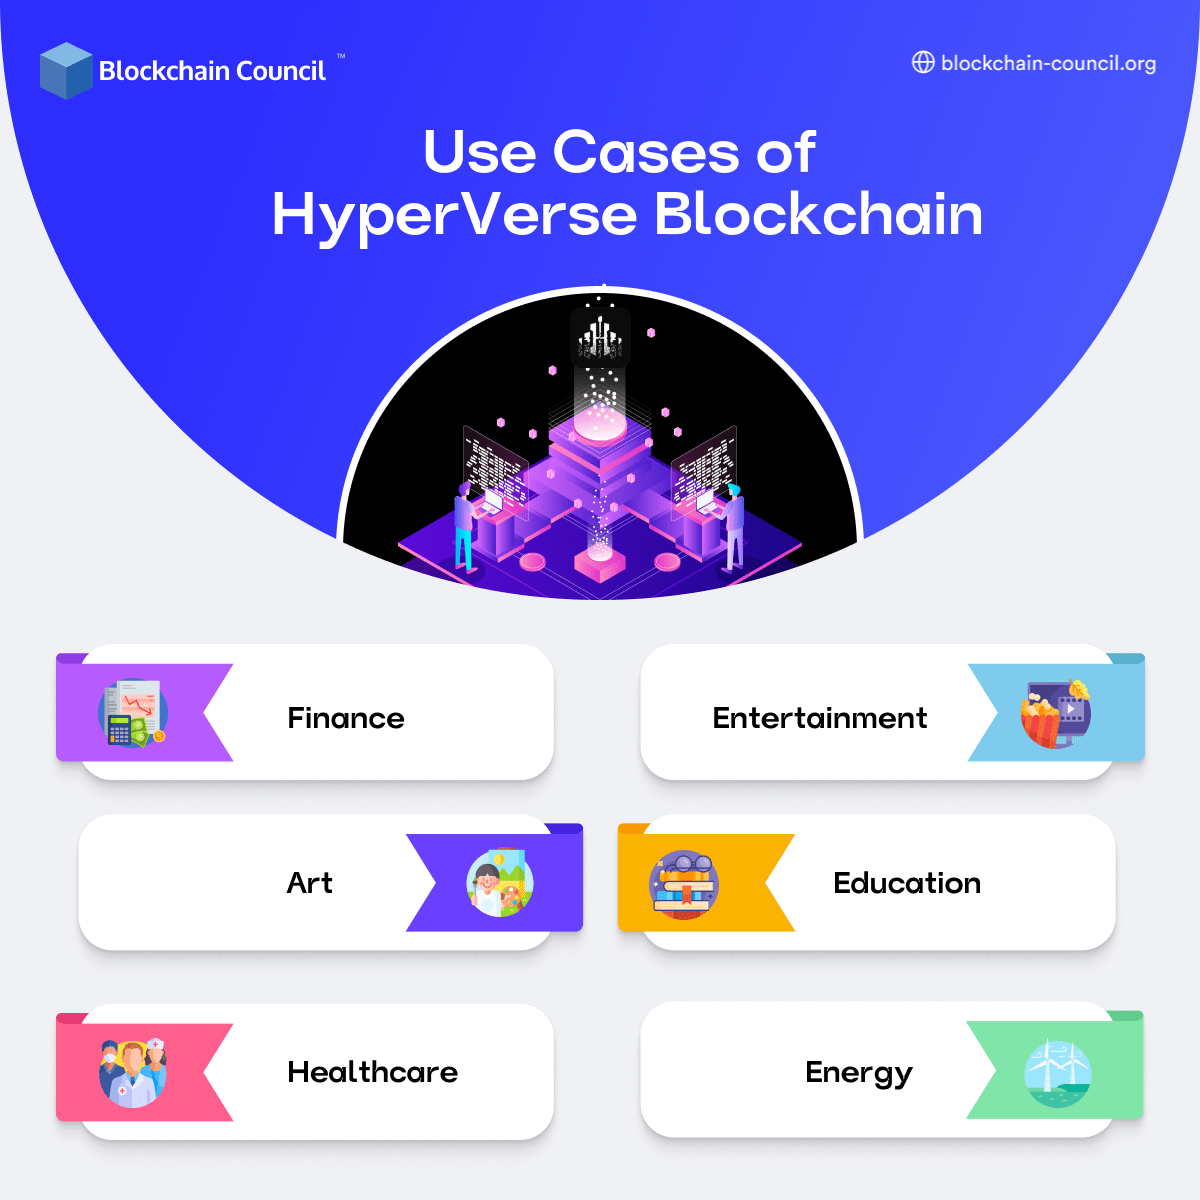 Use Cases of HyperVerse Blockchain